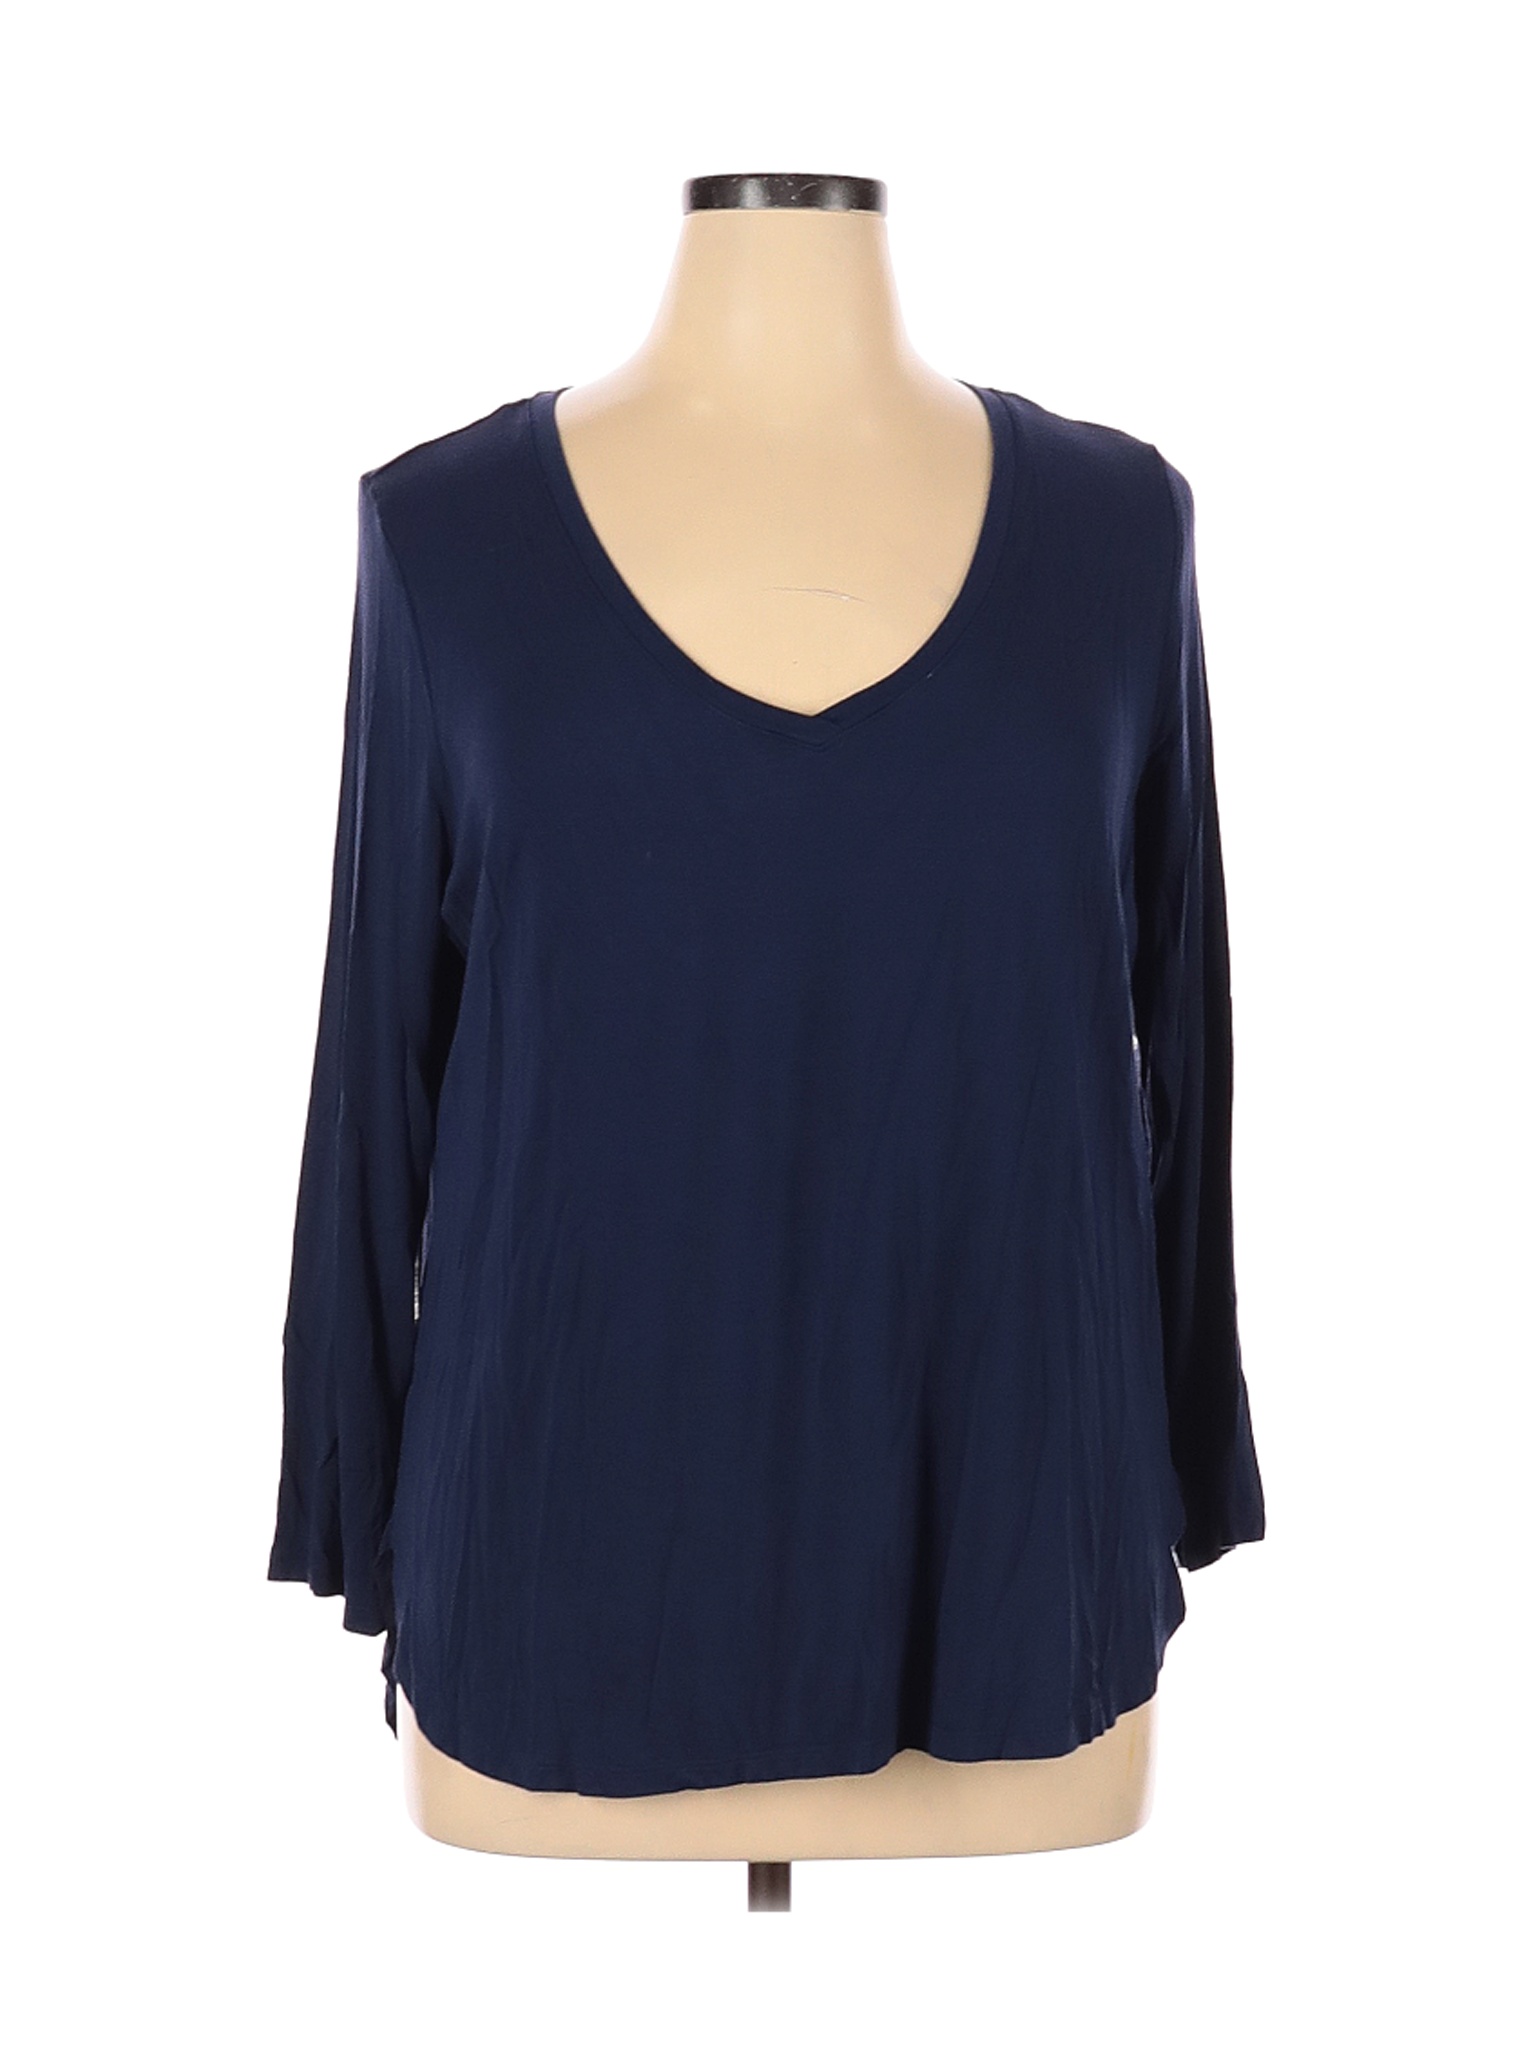 Old Navy Women Blue Long Sleeve T-Shirt XL | eBay